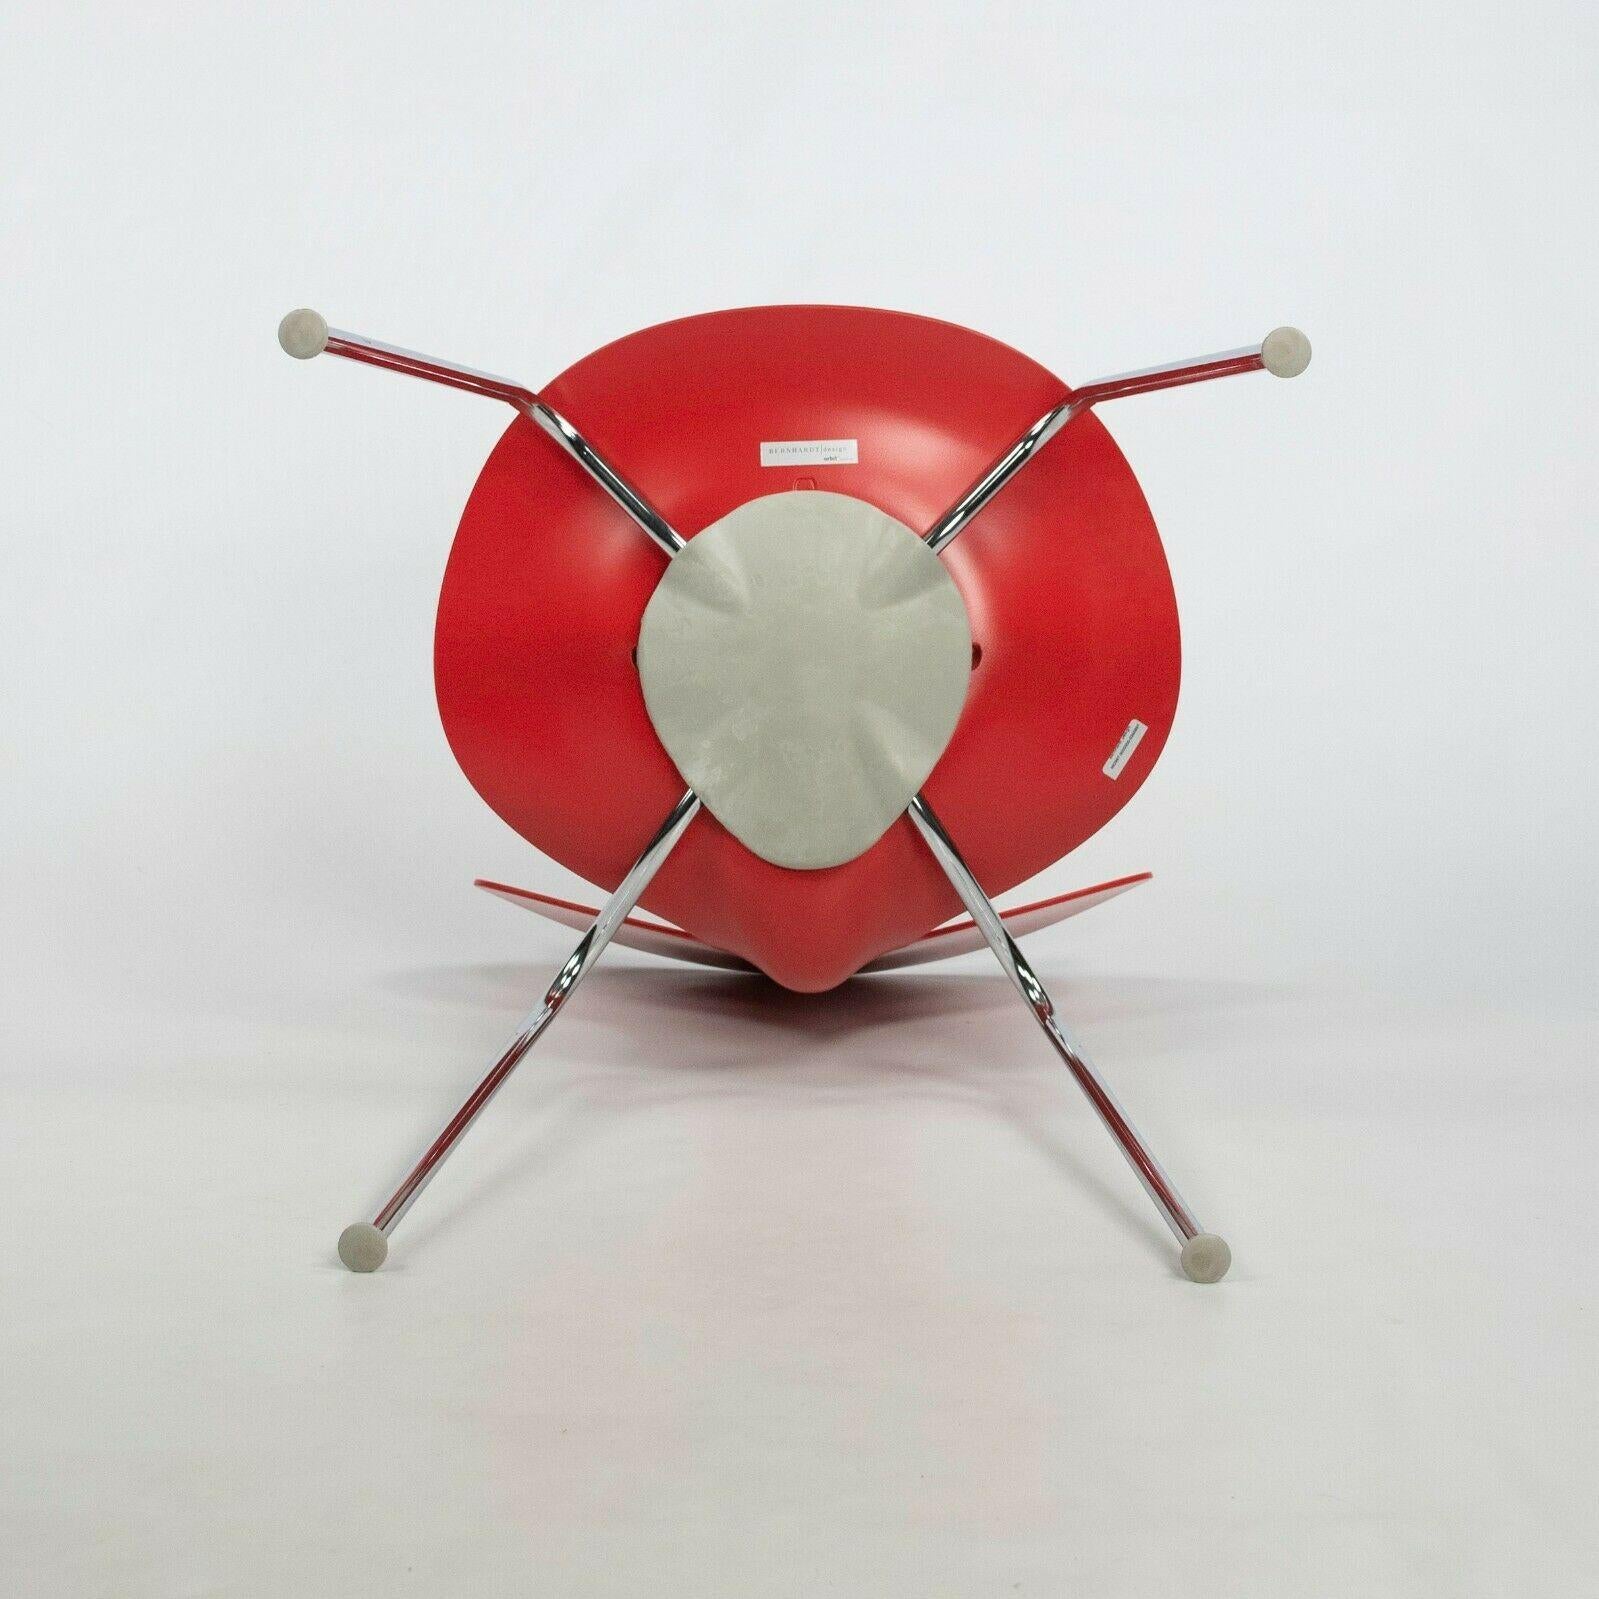 2010s Ross Lovegrove Orbit Chair by Bernhardt Design in Red Plastic Chrome Legs For Sale 5